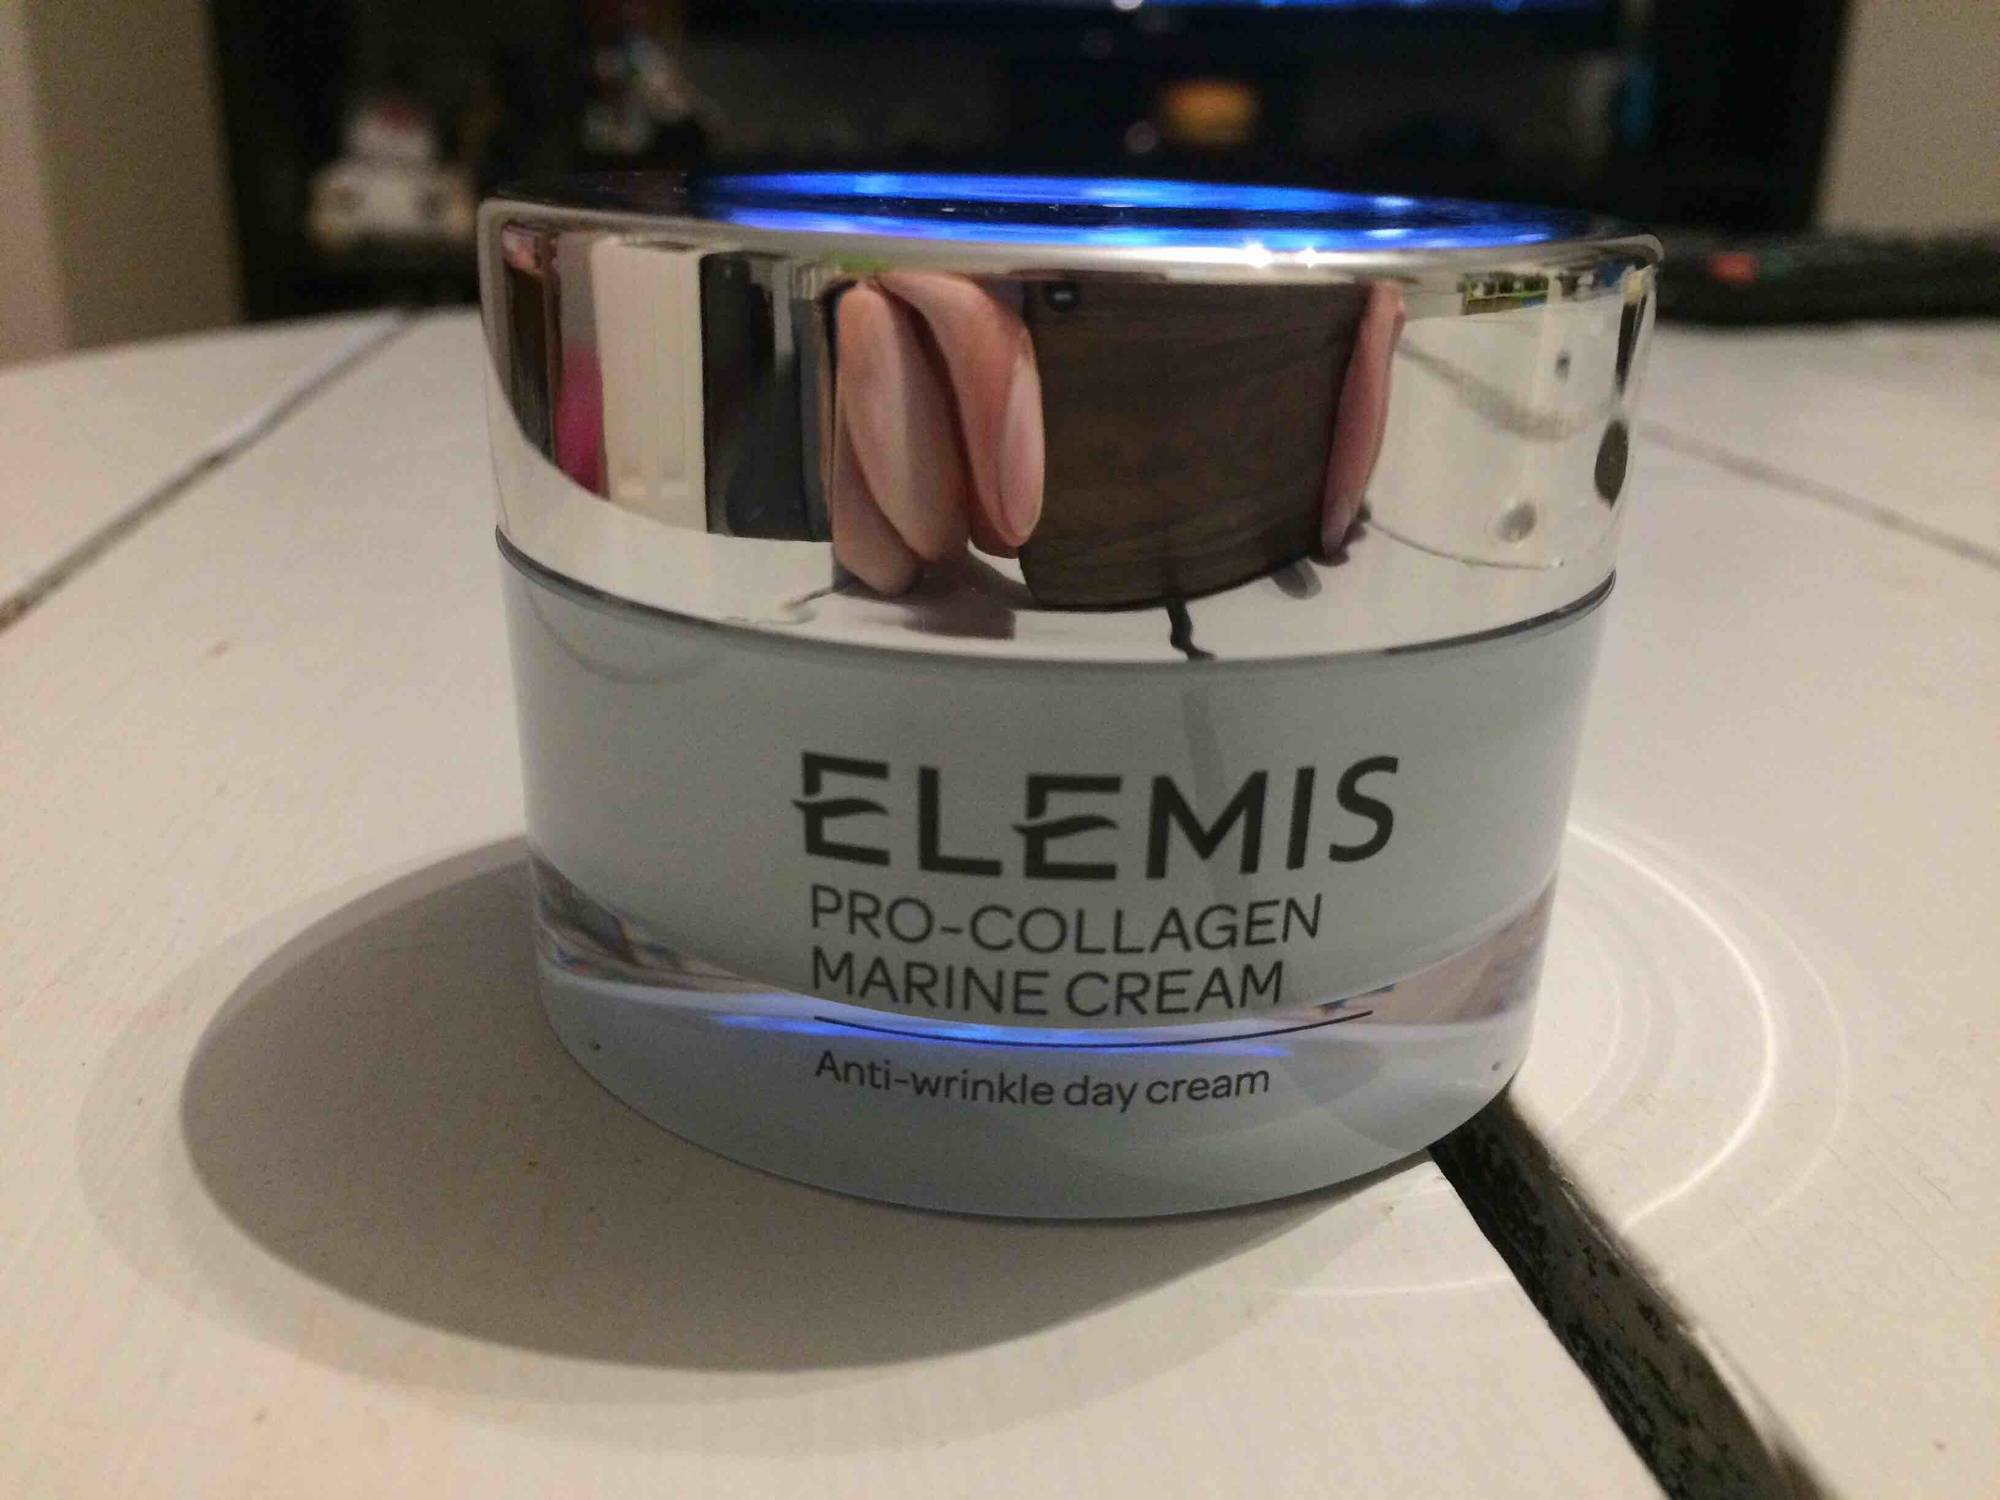 ELEMIS - Pro-collagen marine cream - Anti-wrinkle day cream